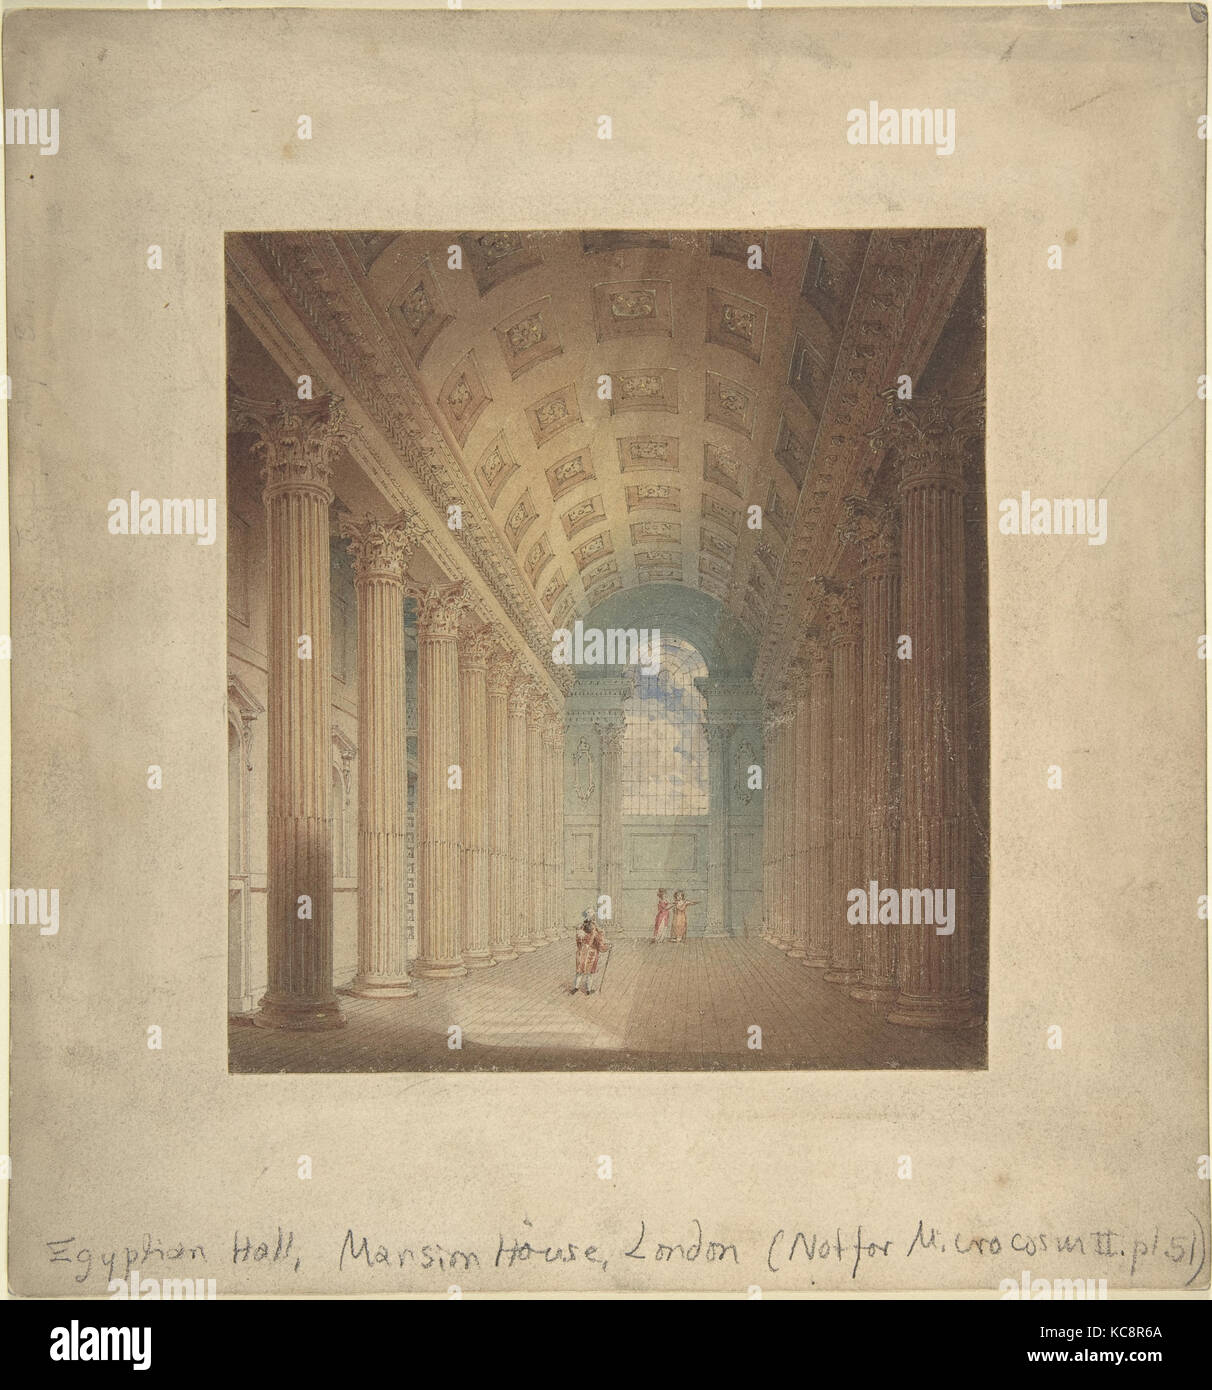 Sala Egizia, Mansion House, Londra, attribuita ad Auguste Charles Pugin, 1795-1825 Foto Stock